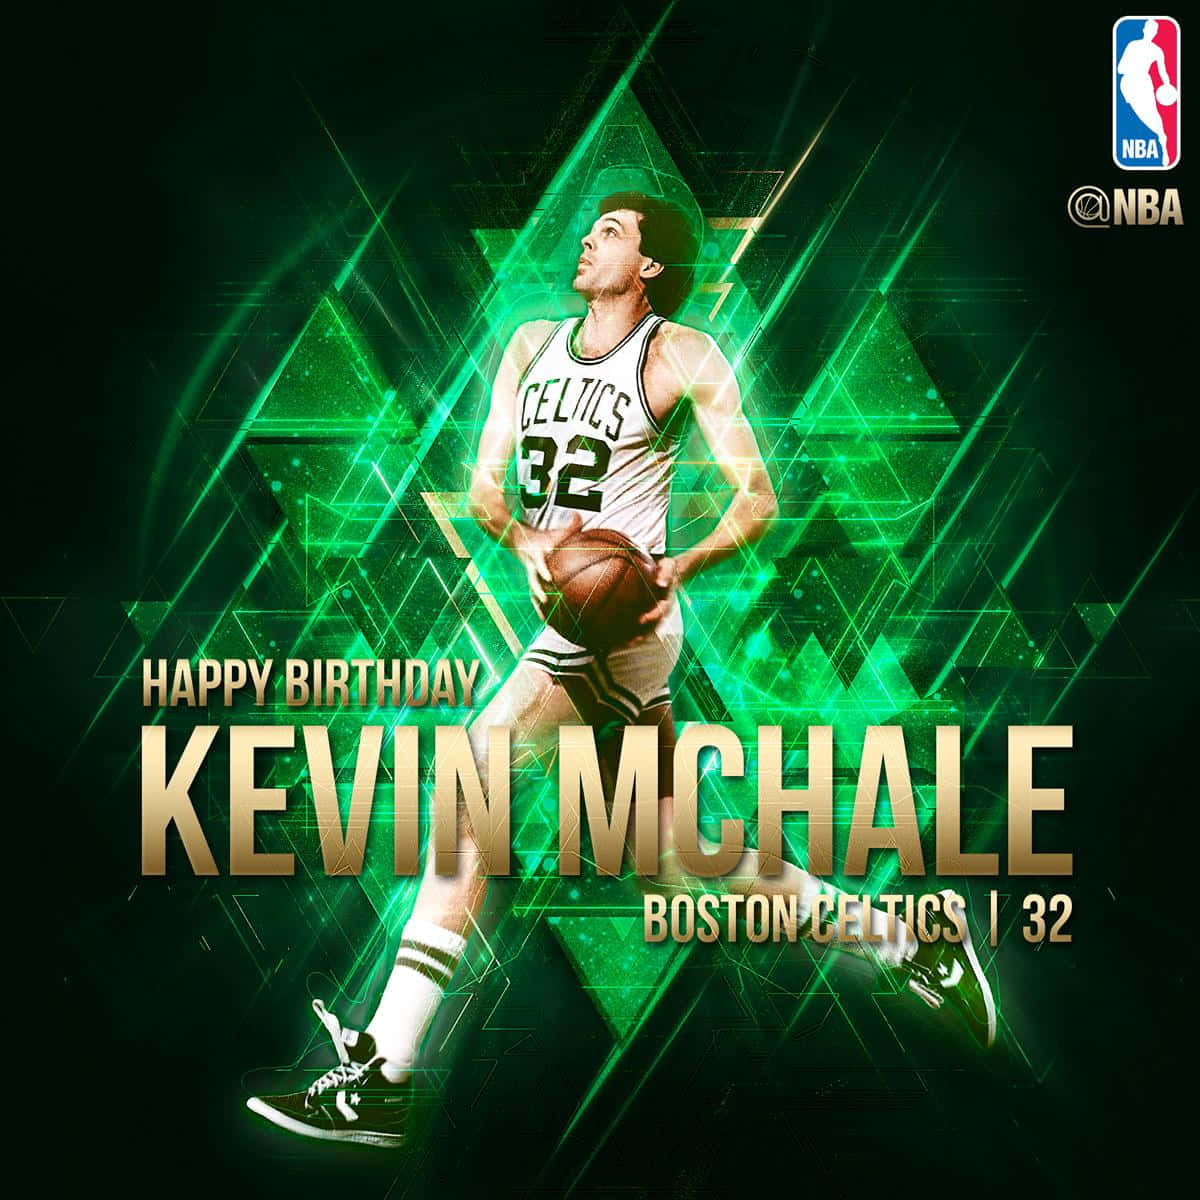 Kevinmchale Boston Celtics Nba Födelsedagsaffisch. Wallpaper